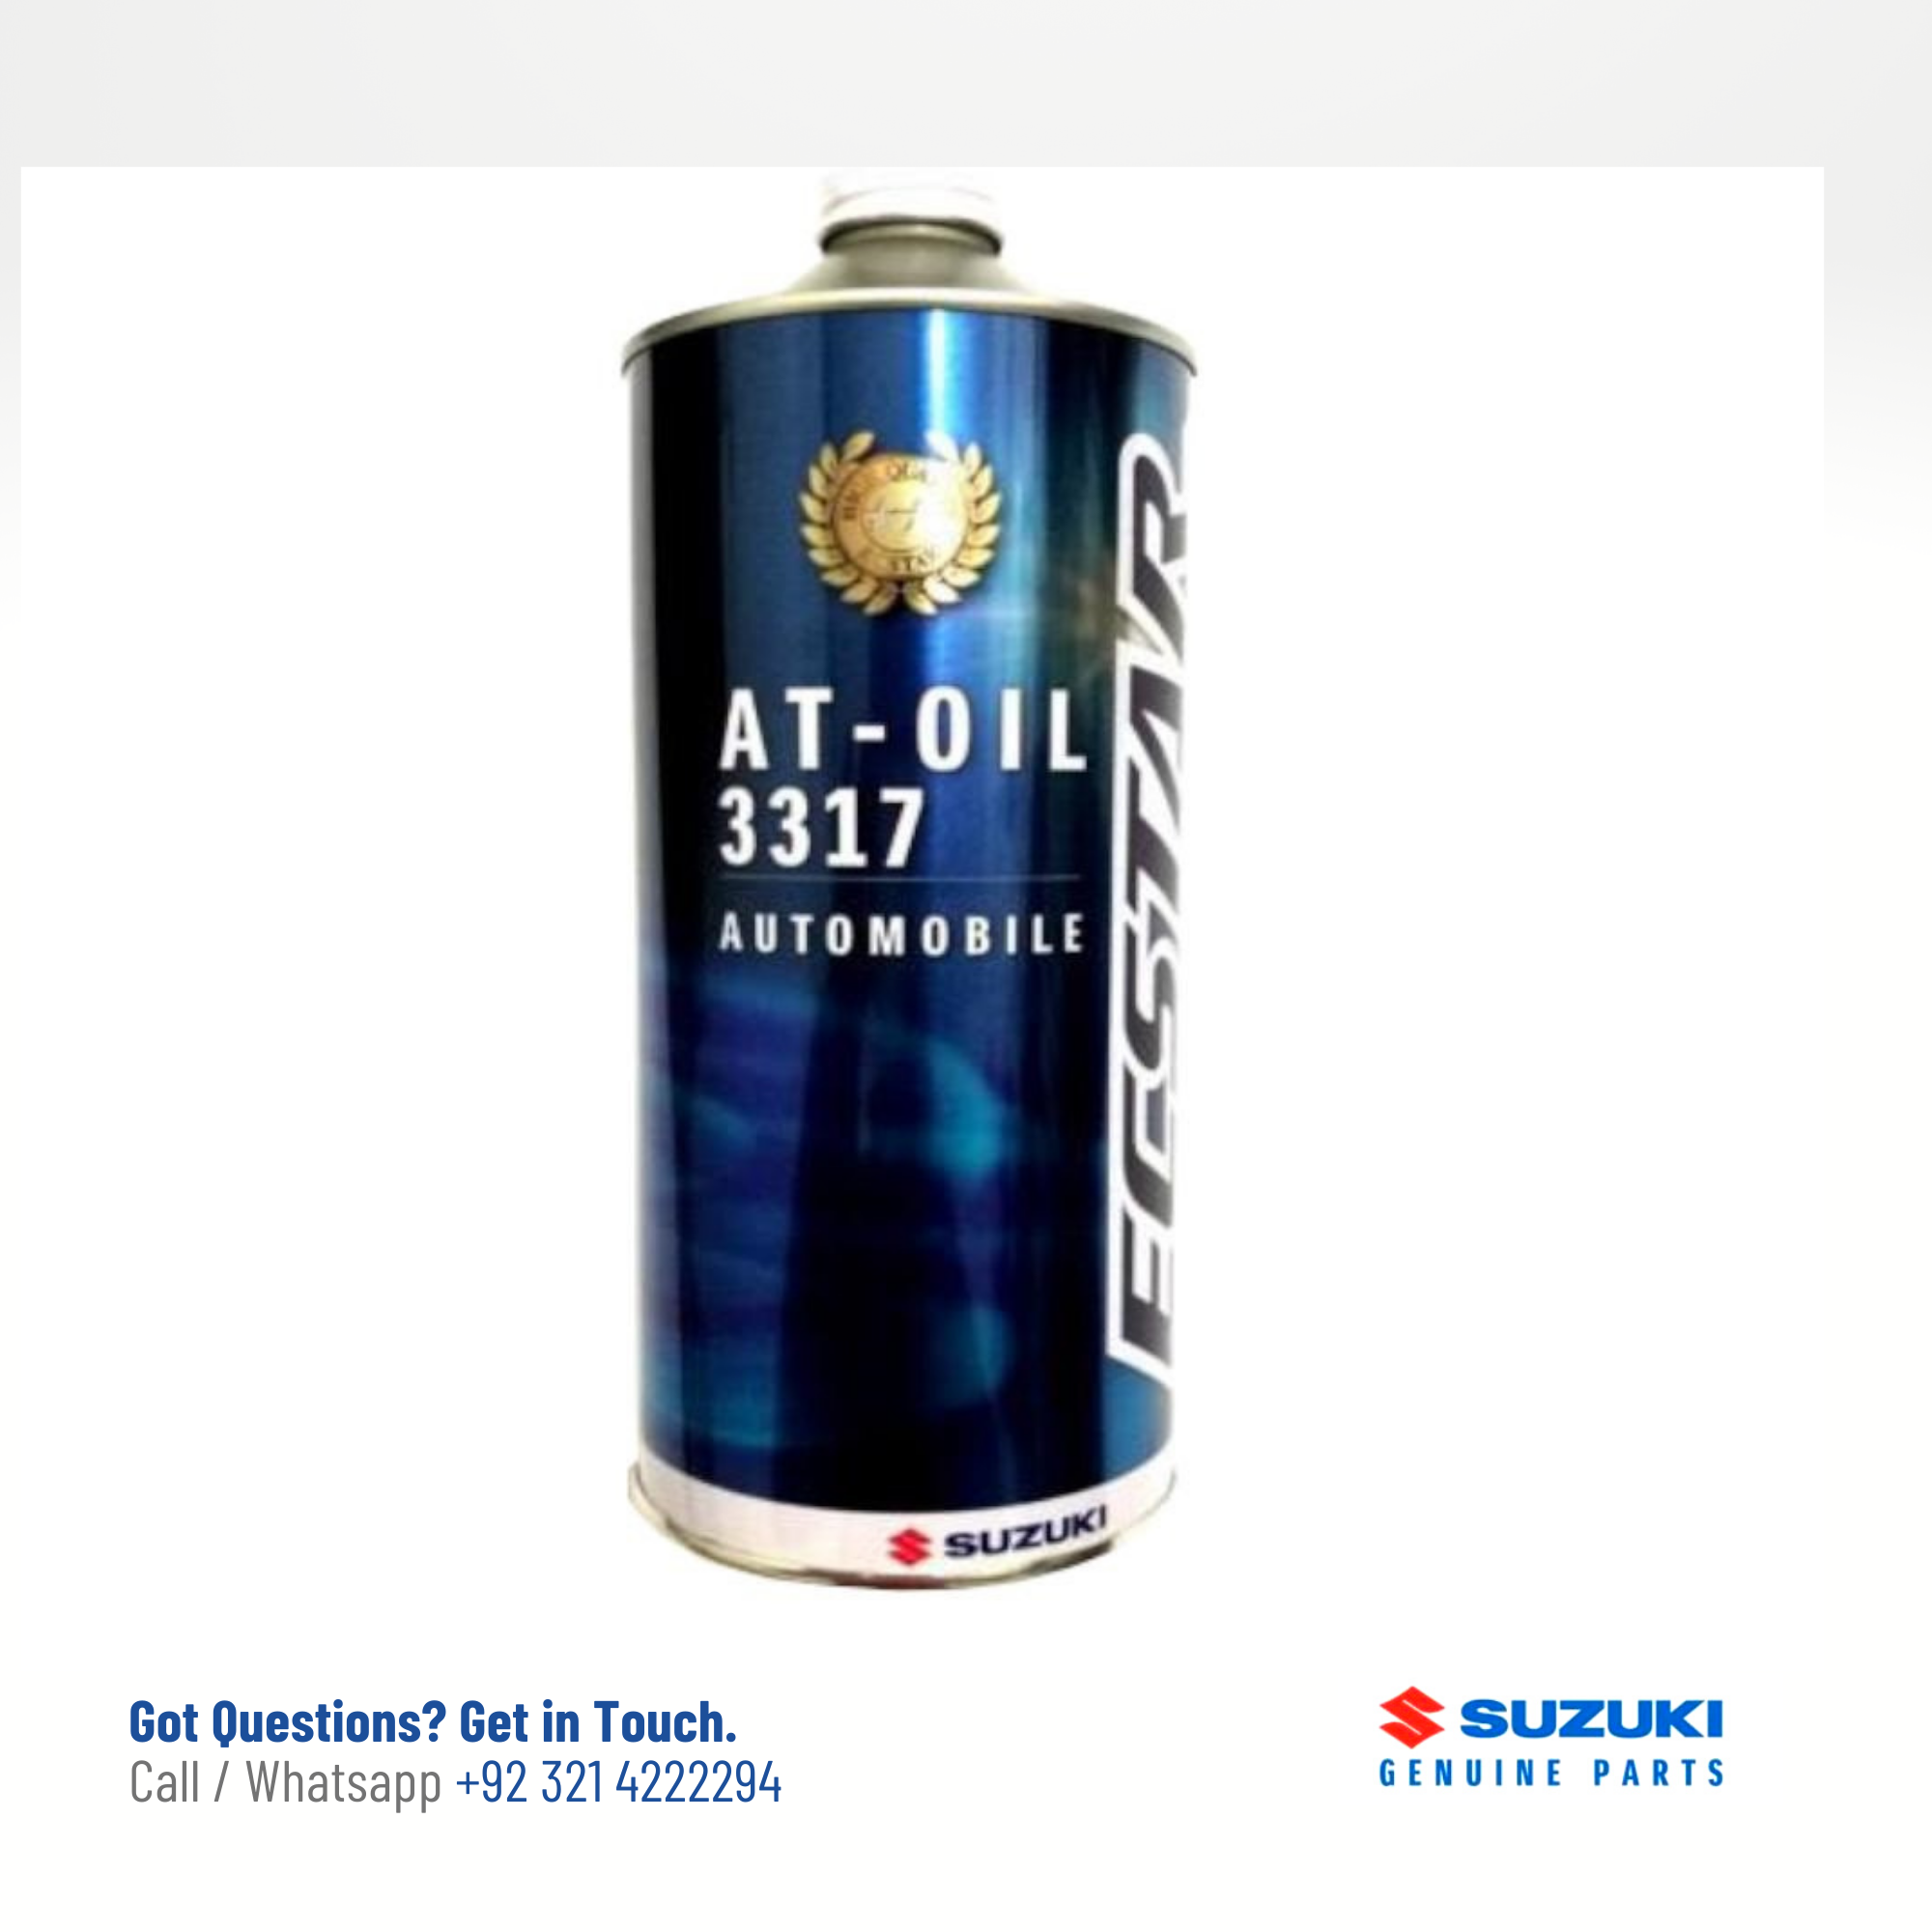 GEAR OIL AUTOMATIC TRANSMISSION ATF 3317 FOR SUZUKI (1L)